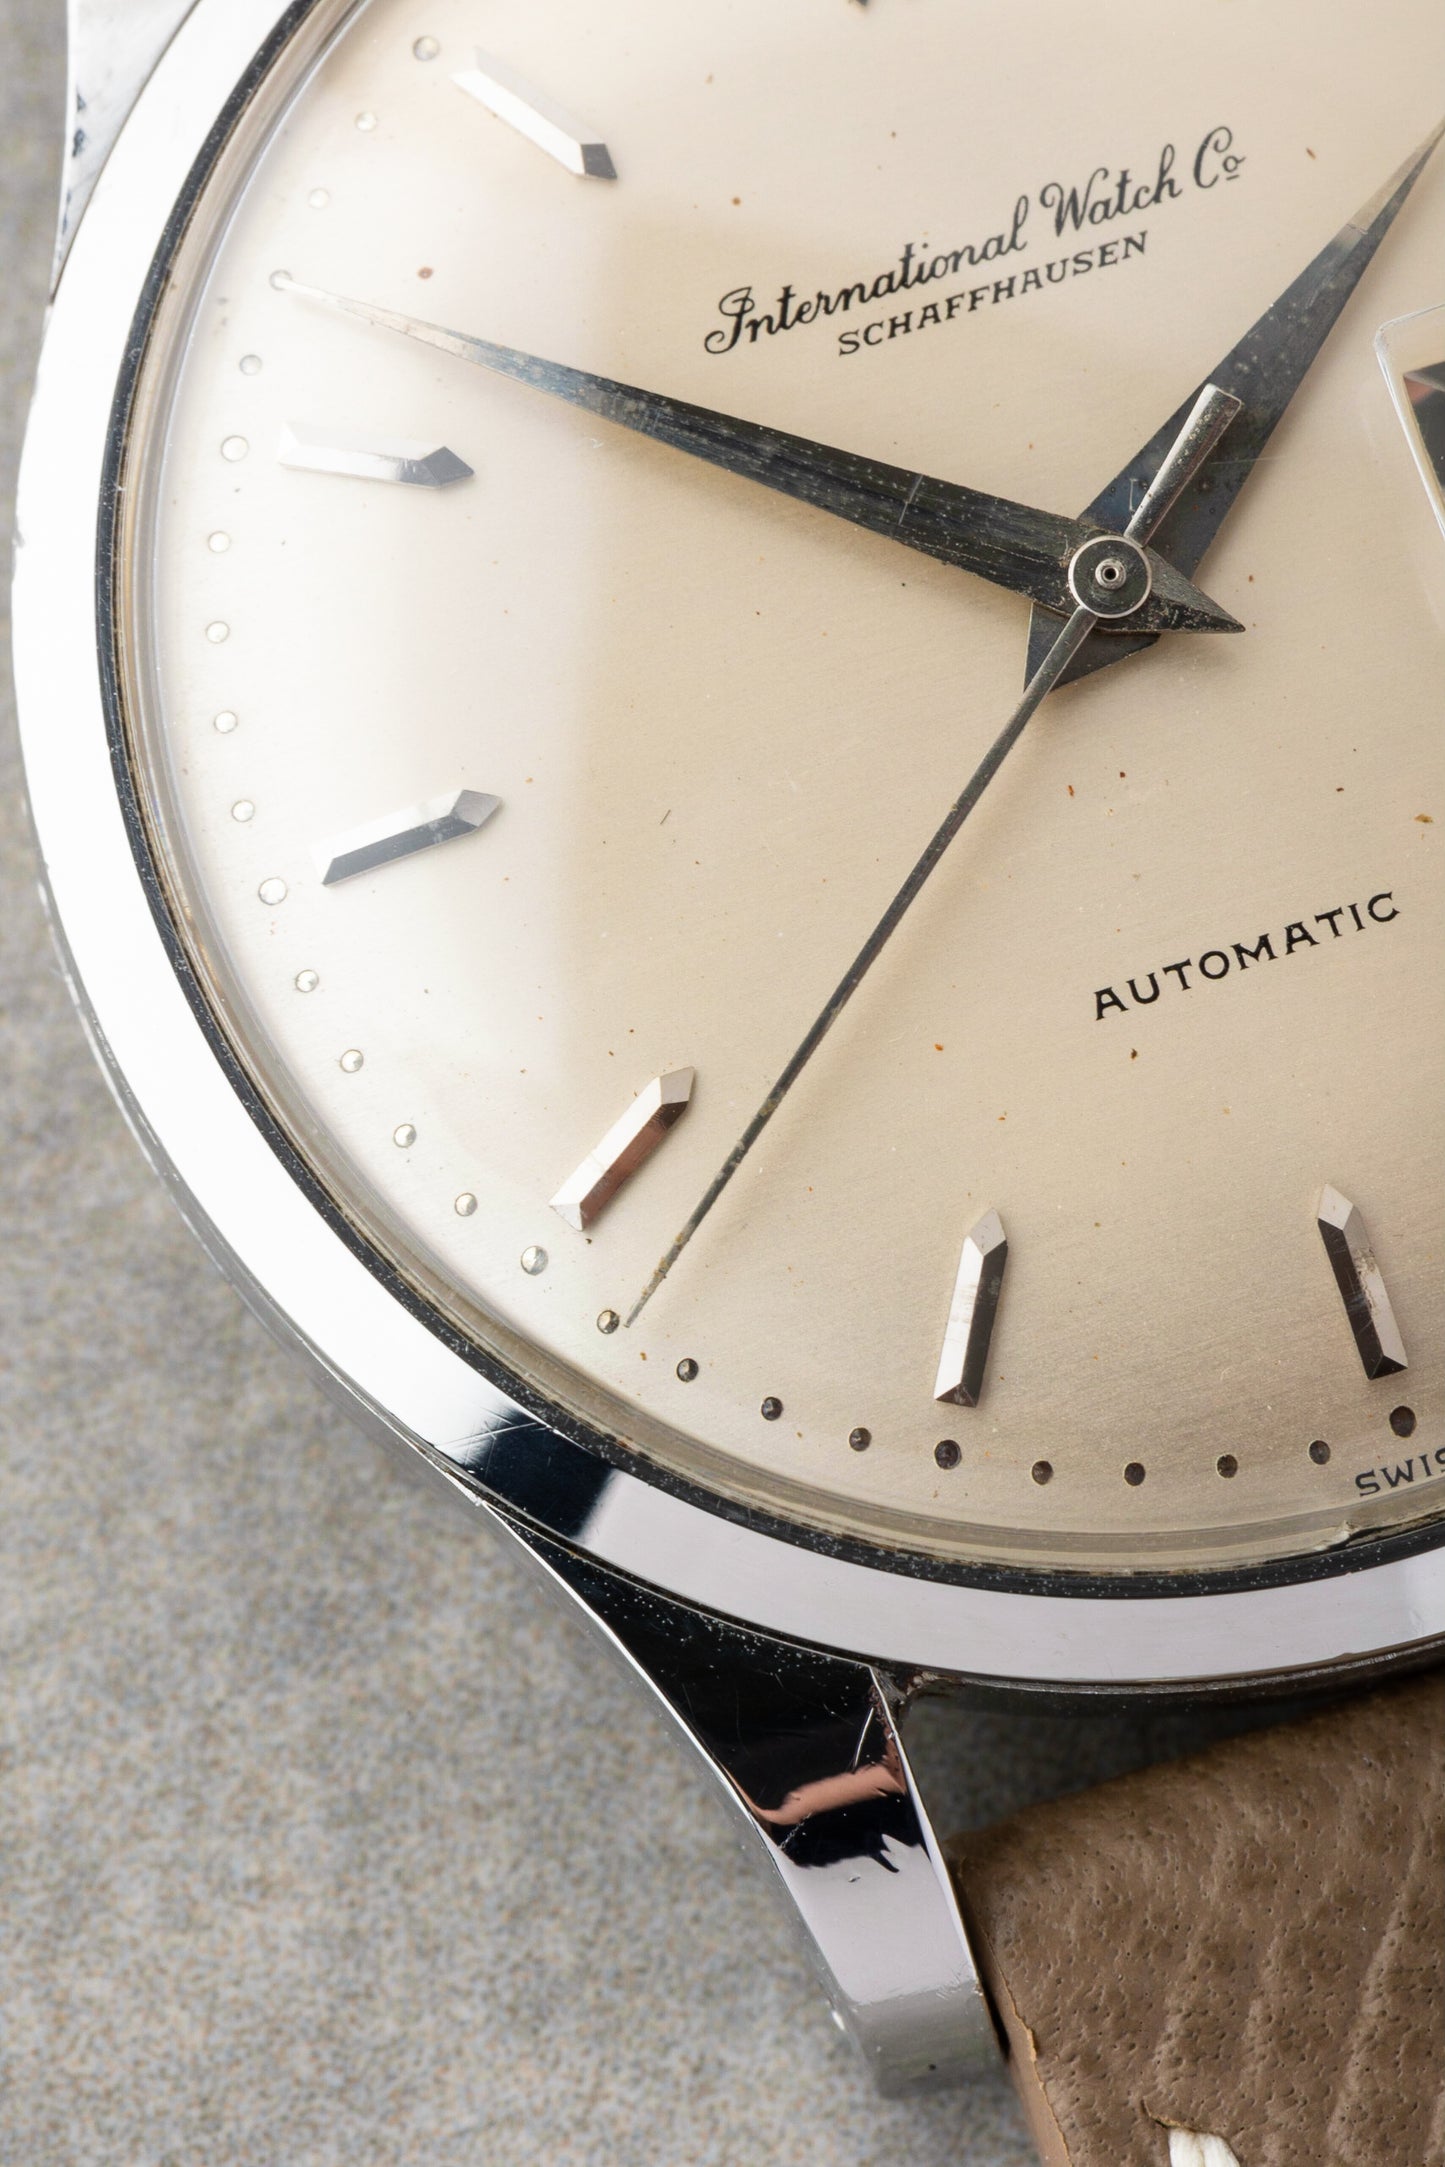 1964 IWC “Calatrava” Automatic Date